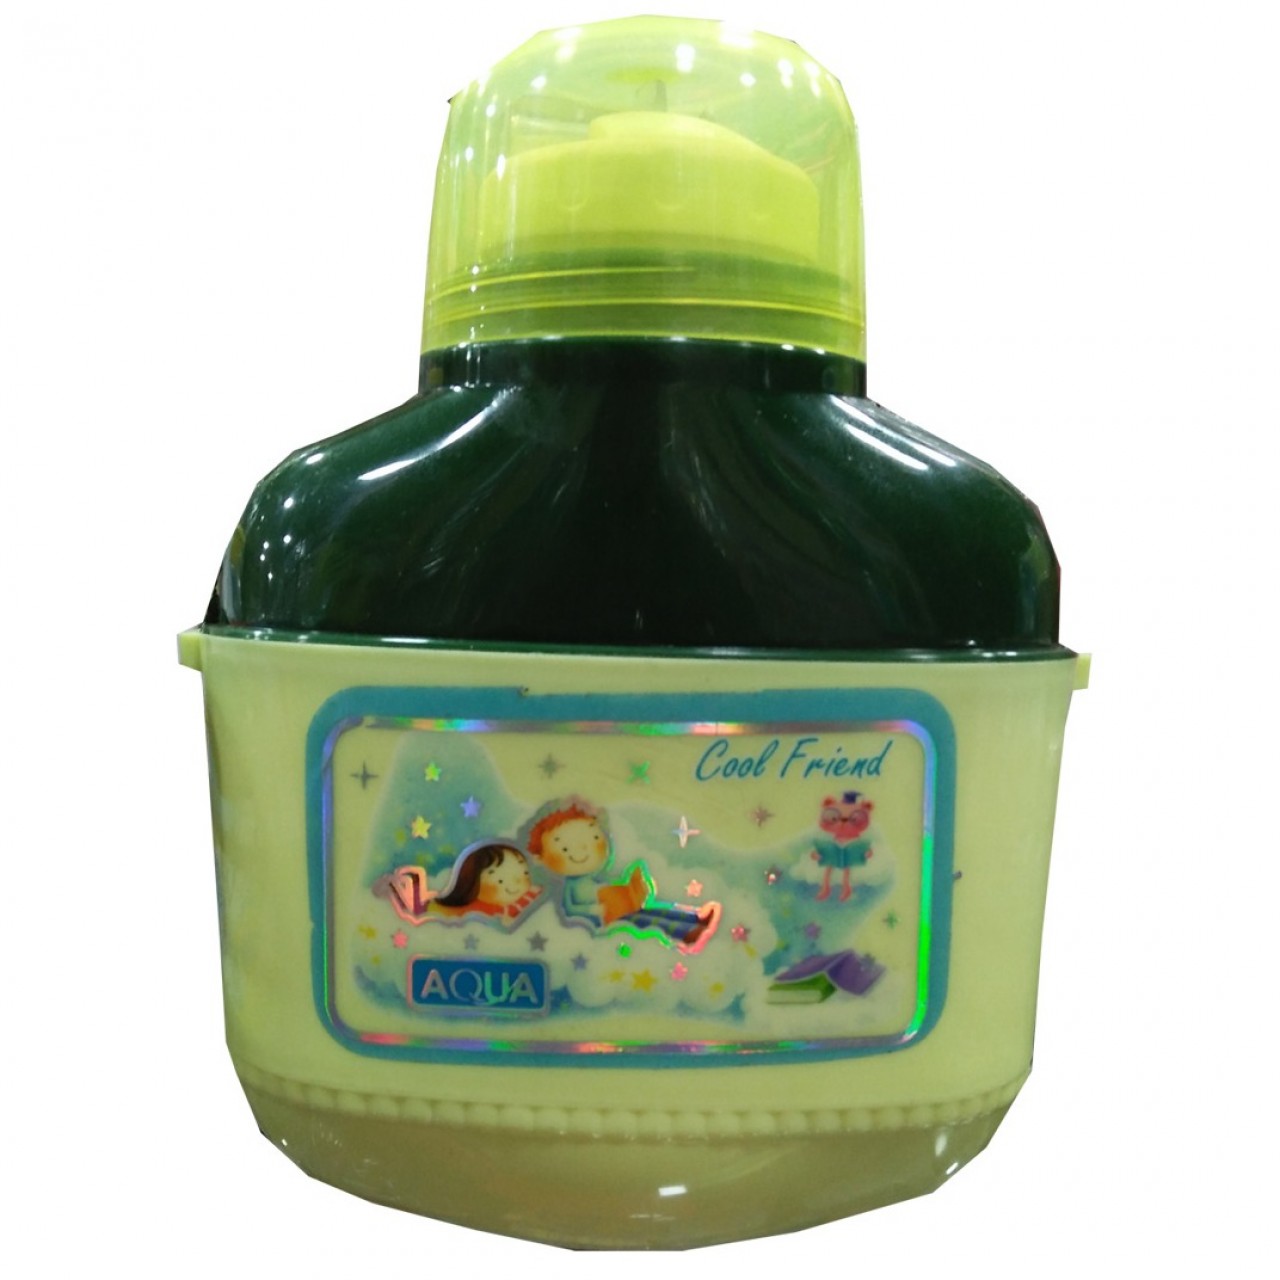 Aqua Water bottle for Kids - Green